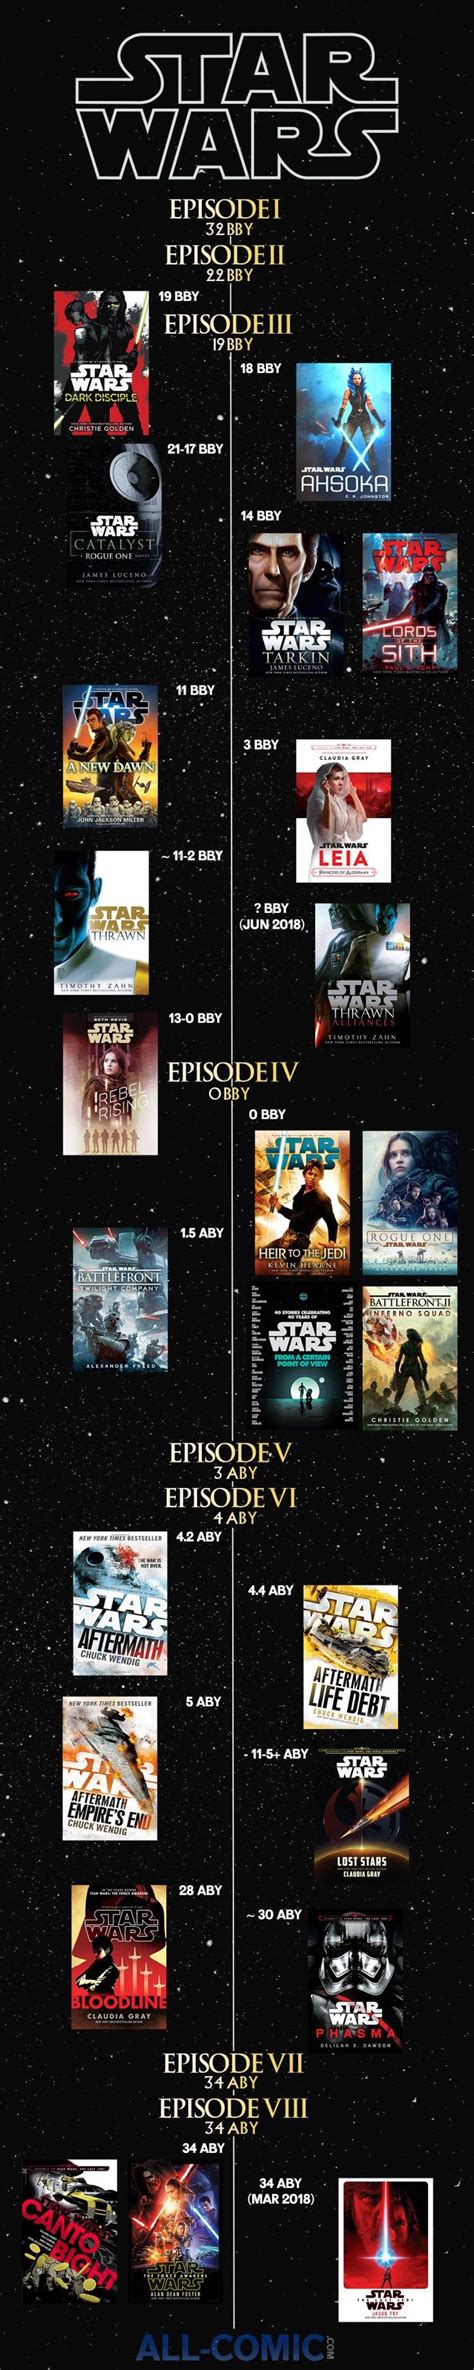 Star Wars Canon Novel Timeline Visual Star Wars Books Star Wars